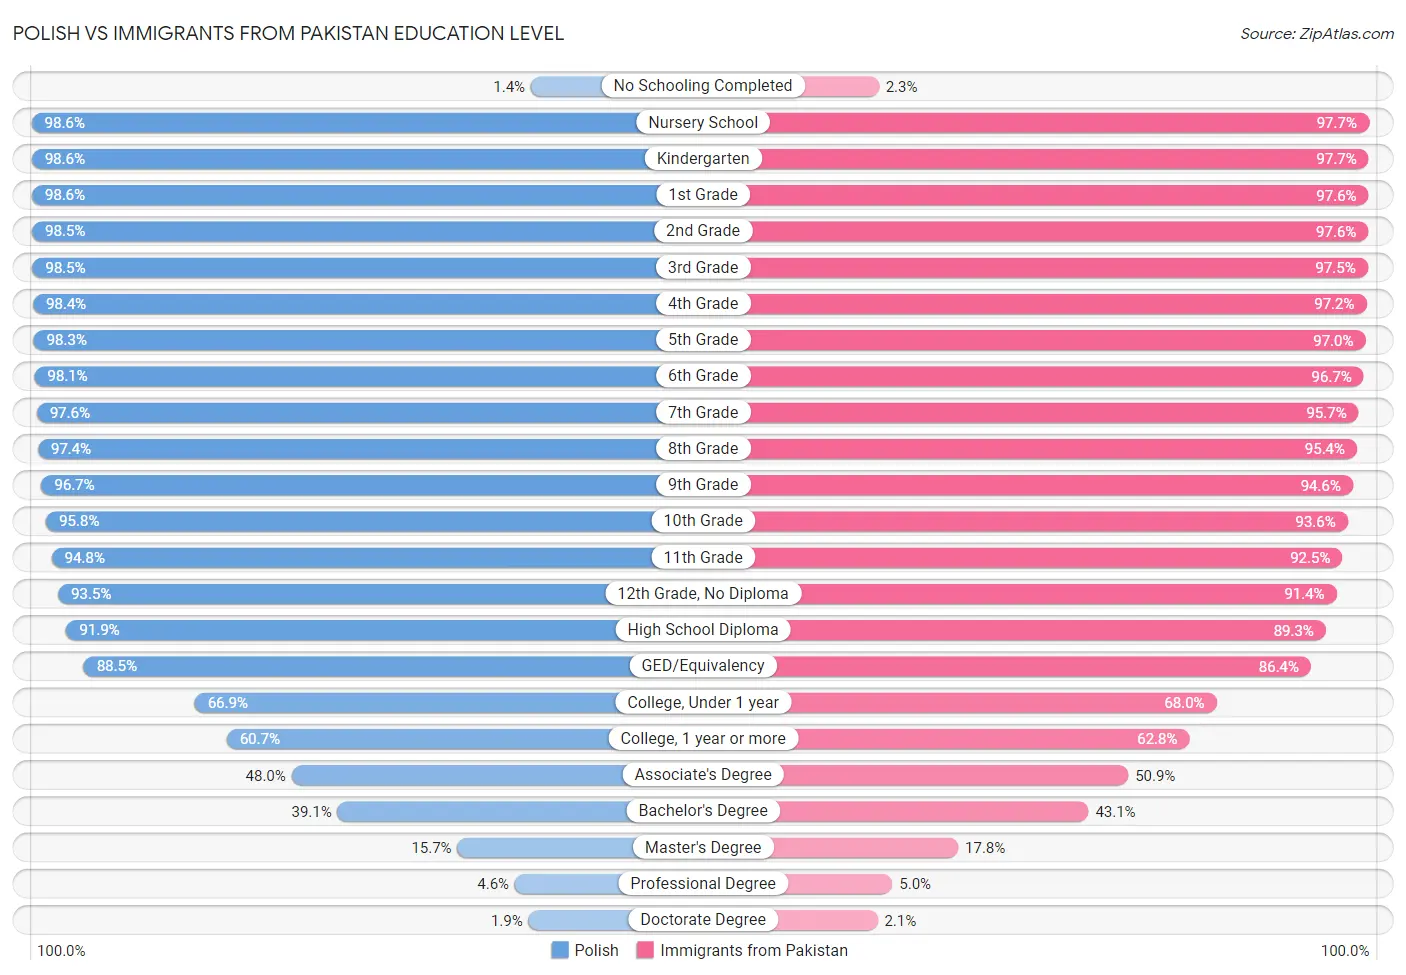 Polish vs Immigrants from Pakistan Education Level